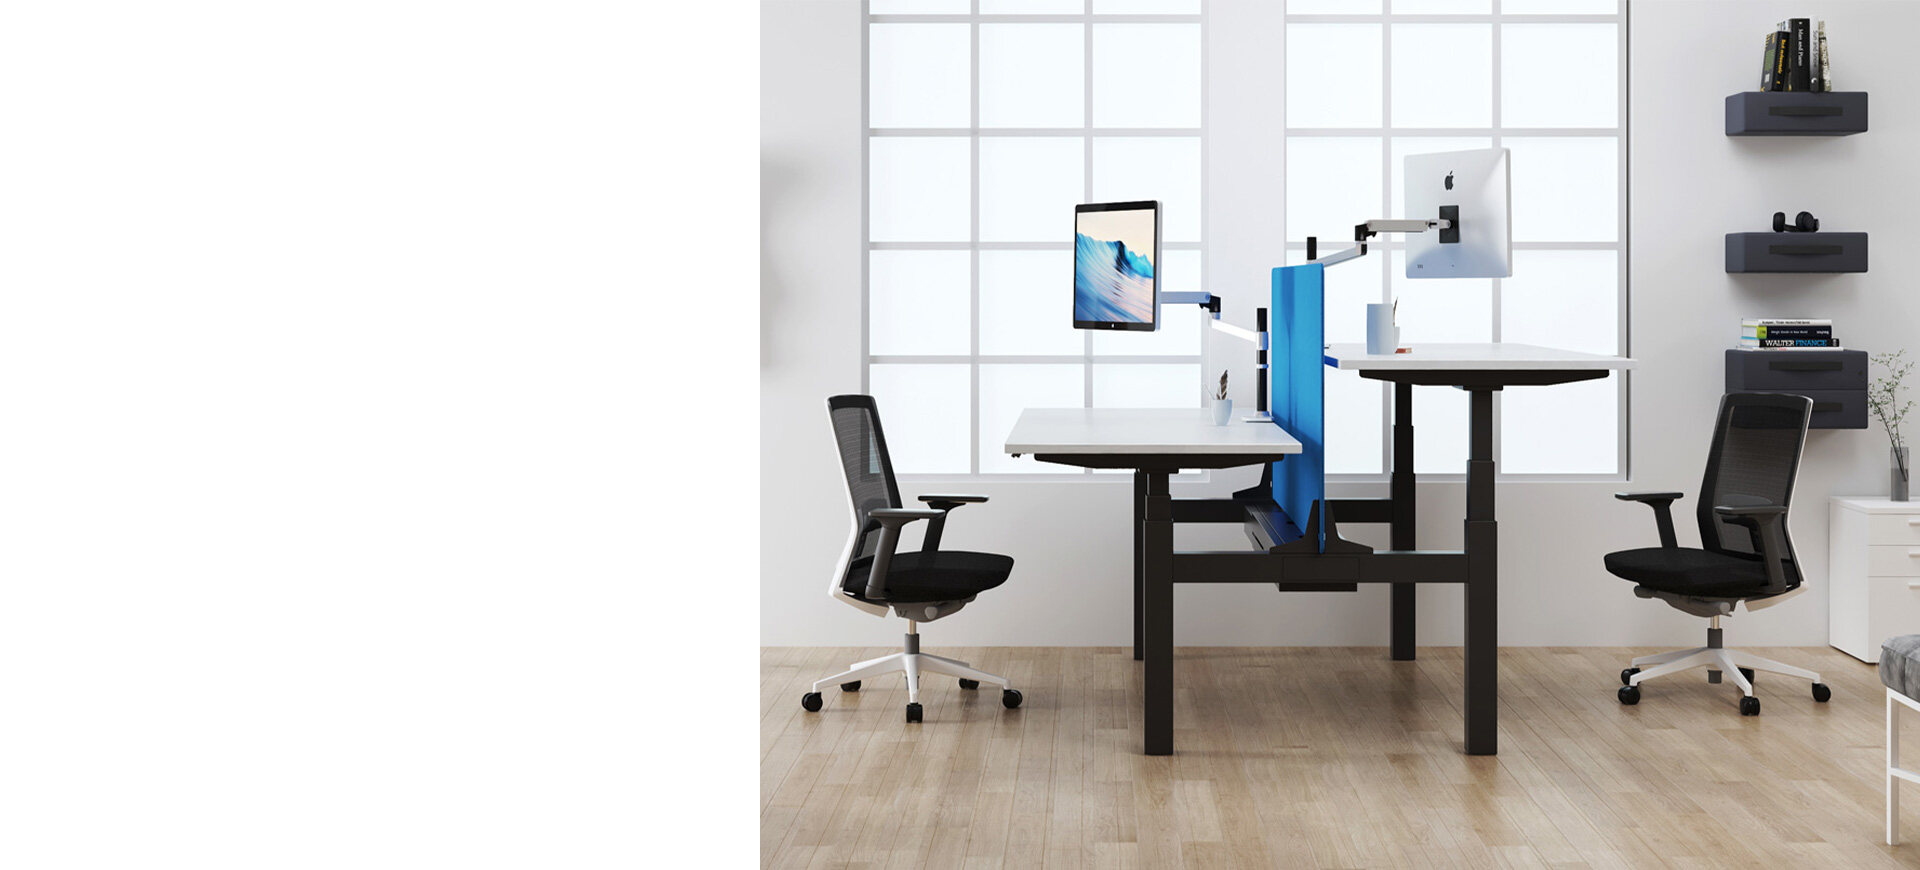 adjustable desk table,height adjustable table desk